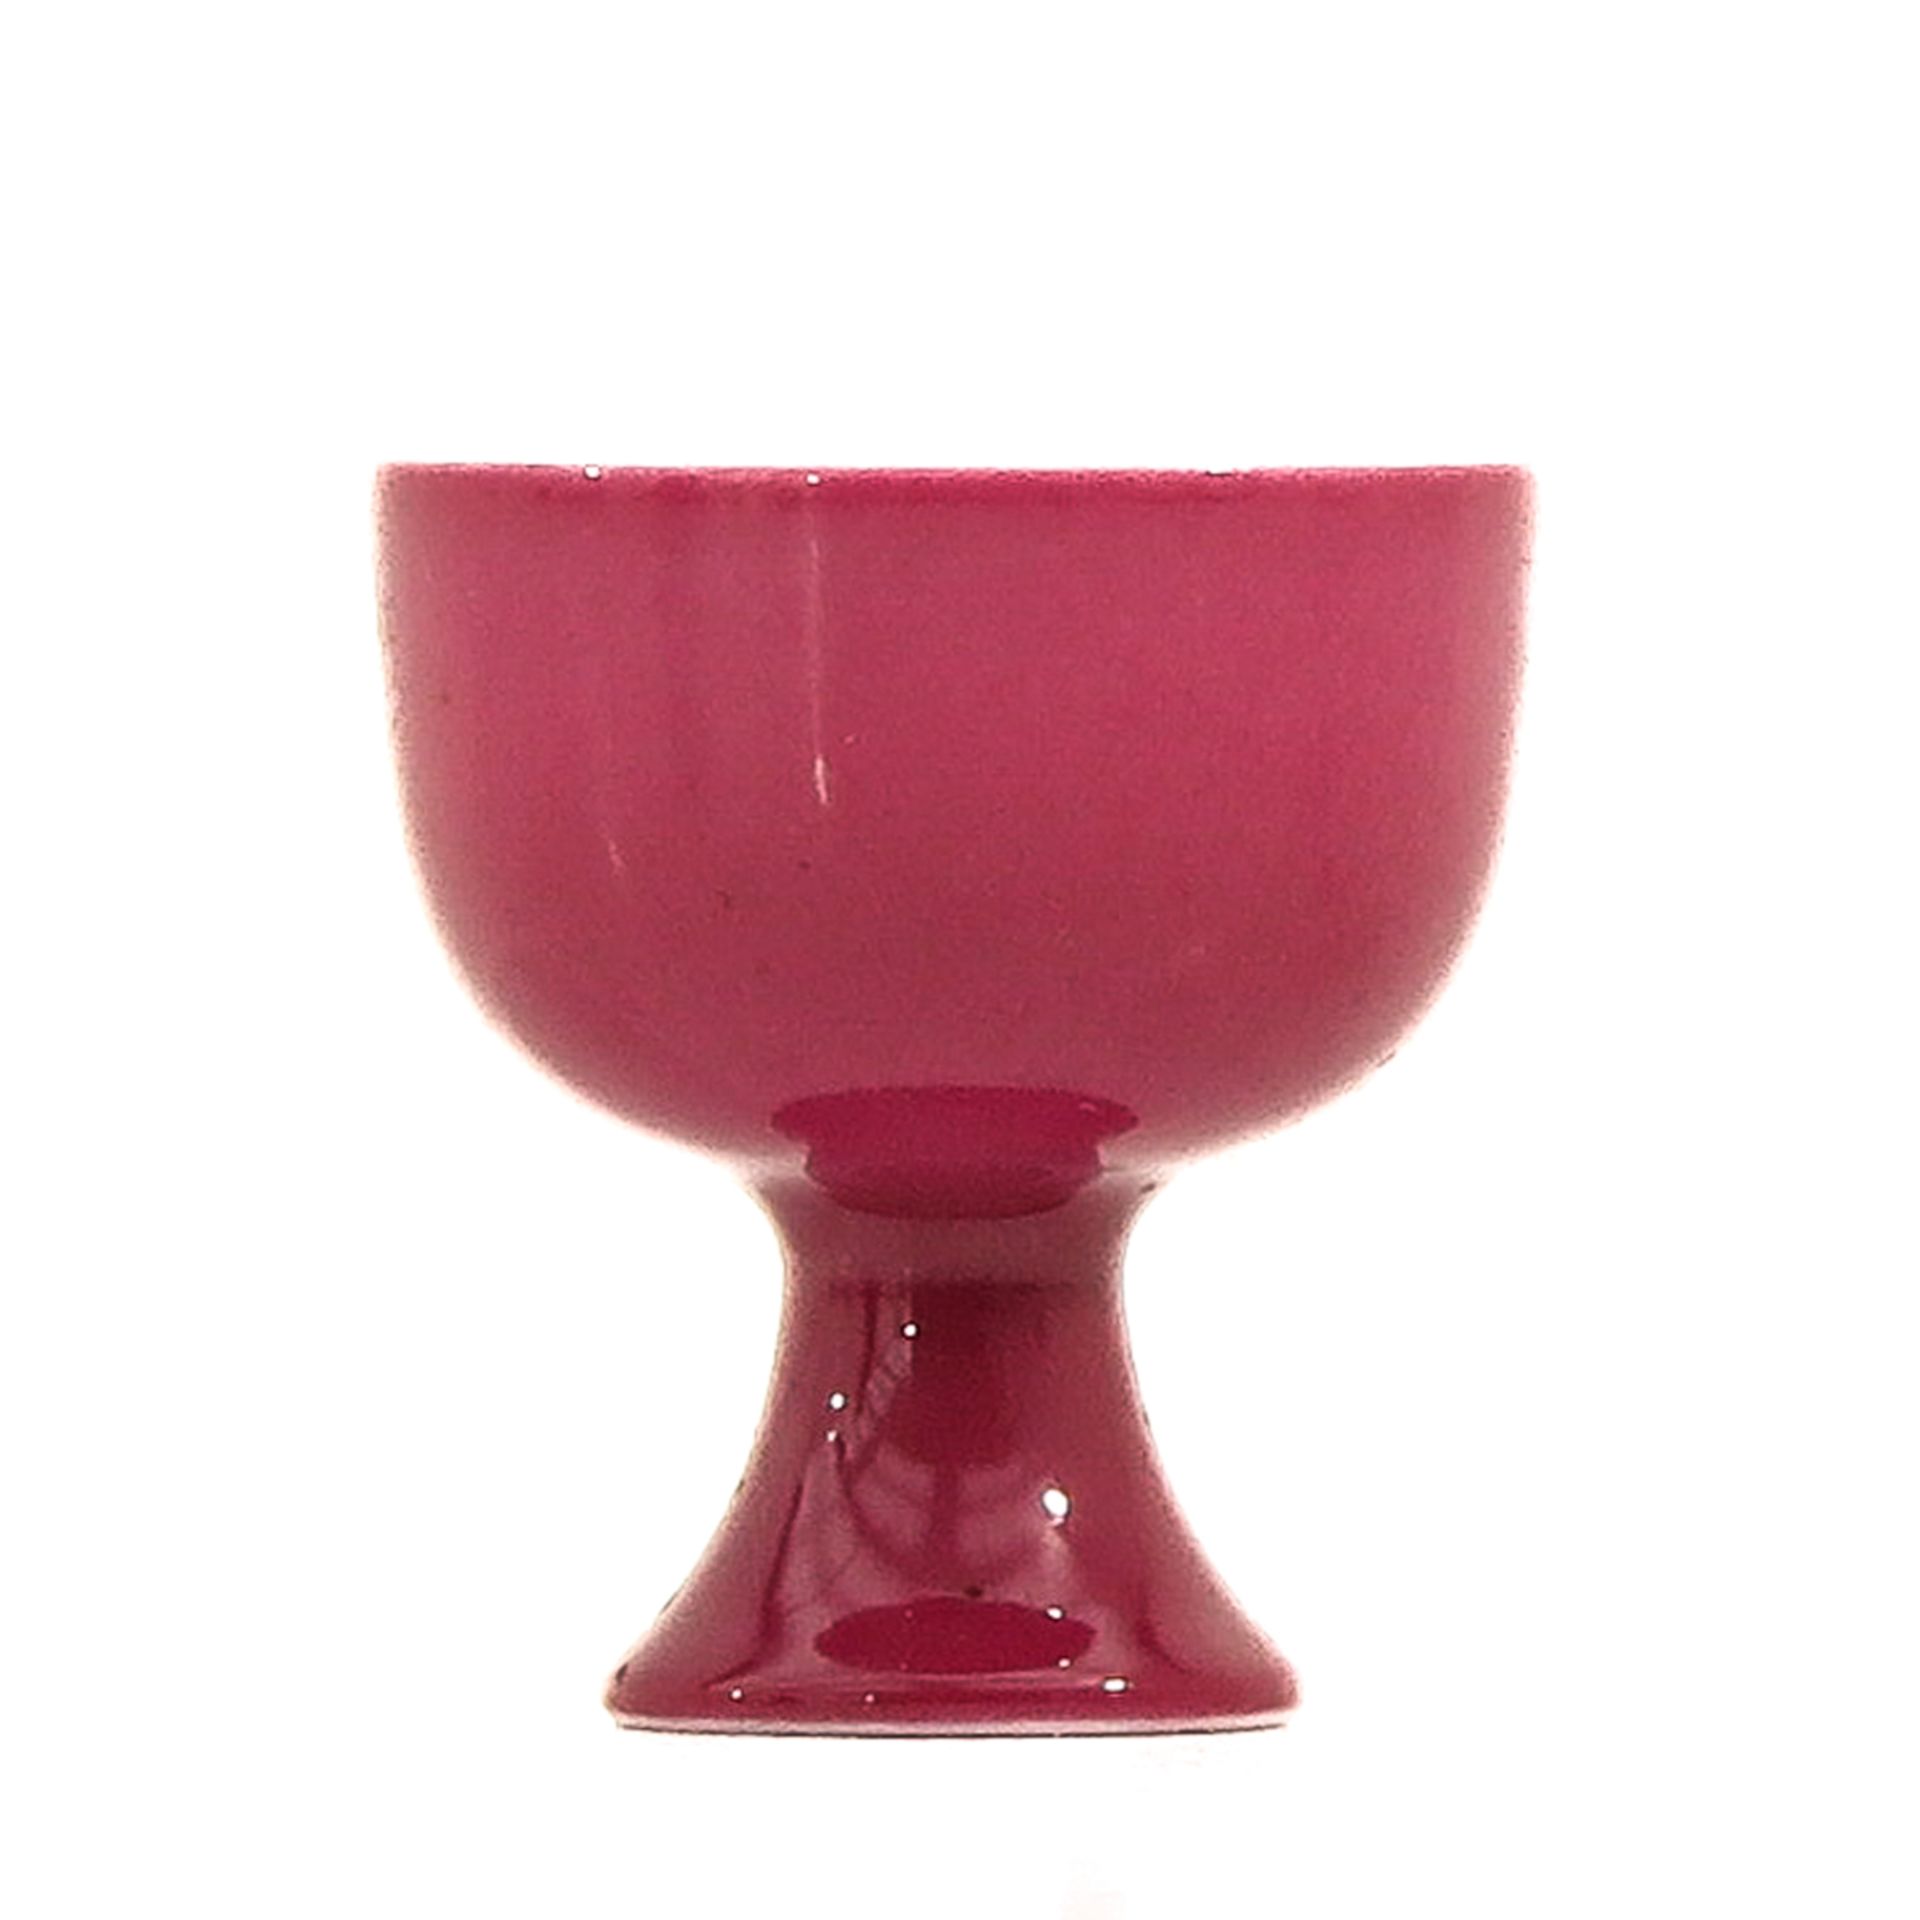 A Miniature Stem Cup - Bild 4 aus 9